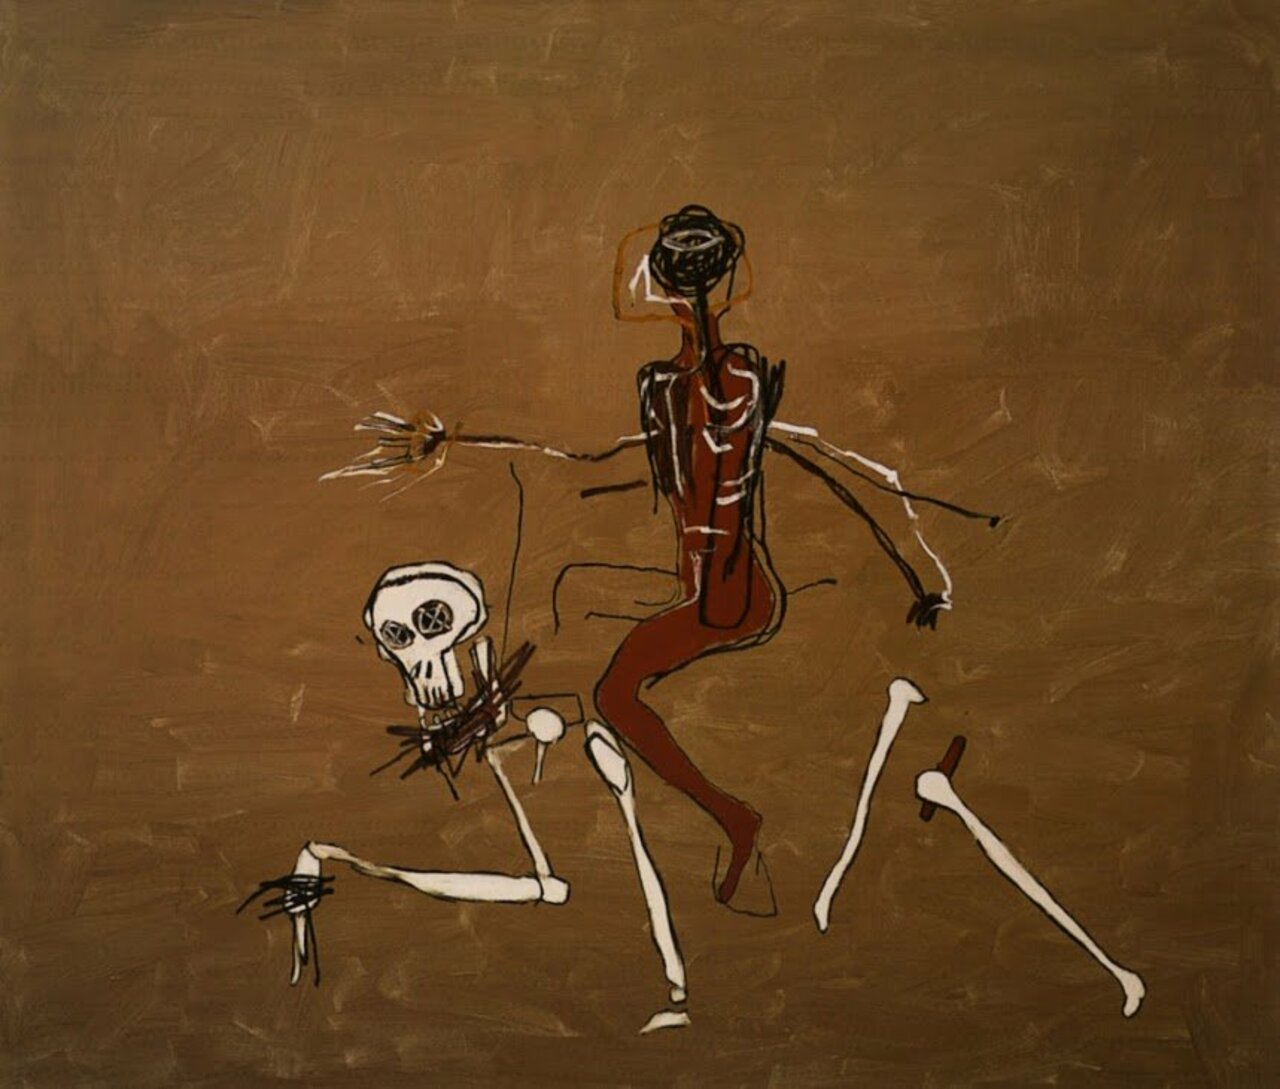 #artist Jean-Michel Basquiat #artwork  "Riding with Death" 1988 #art https://t.co/5mHMy3dPMG